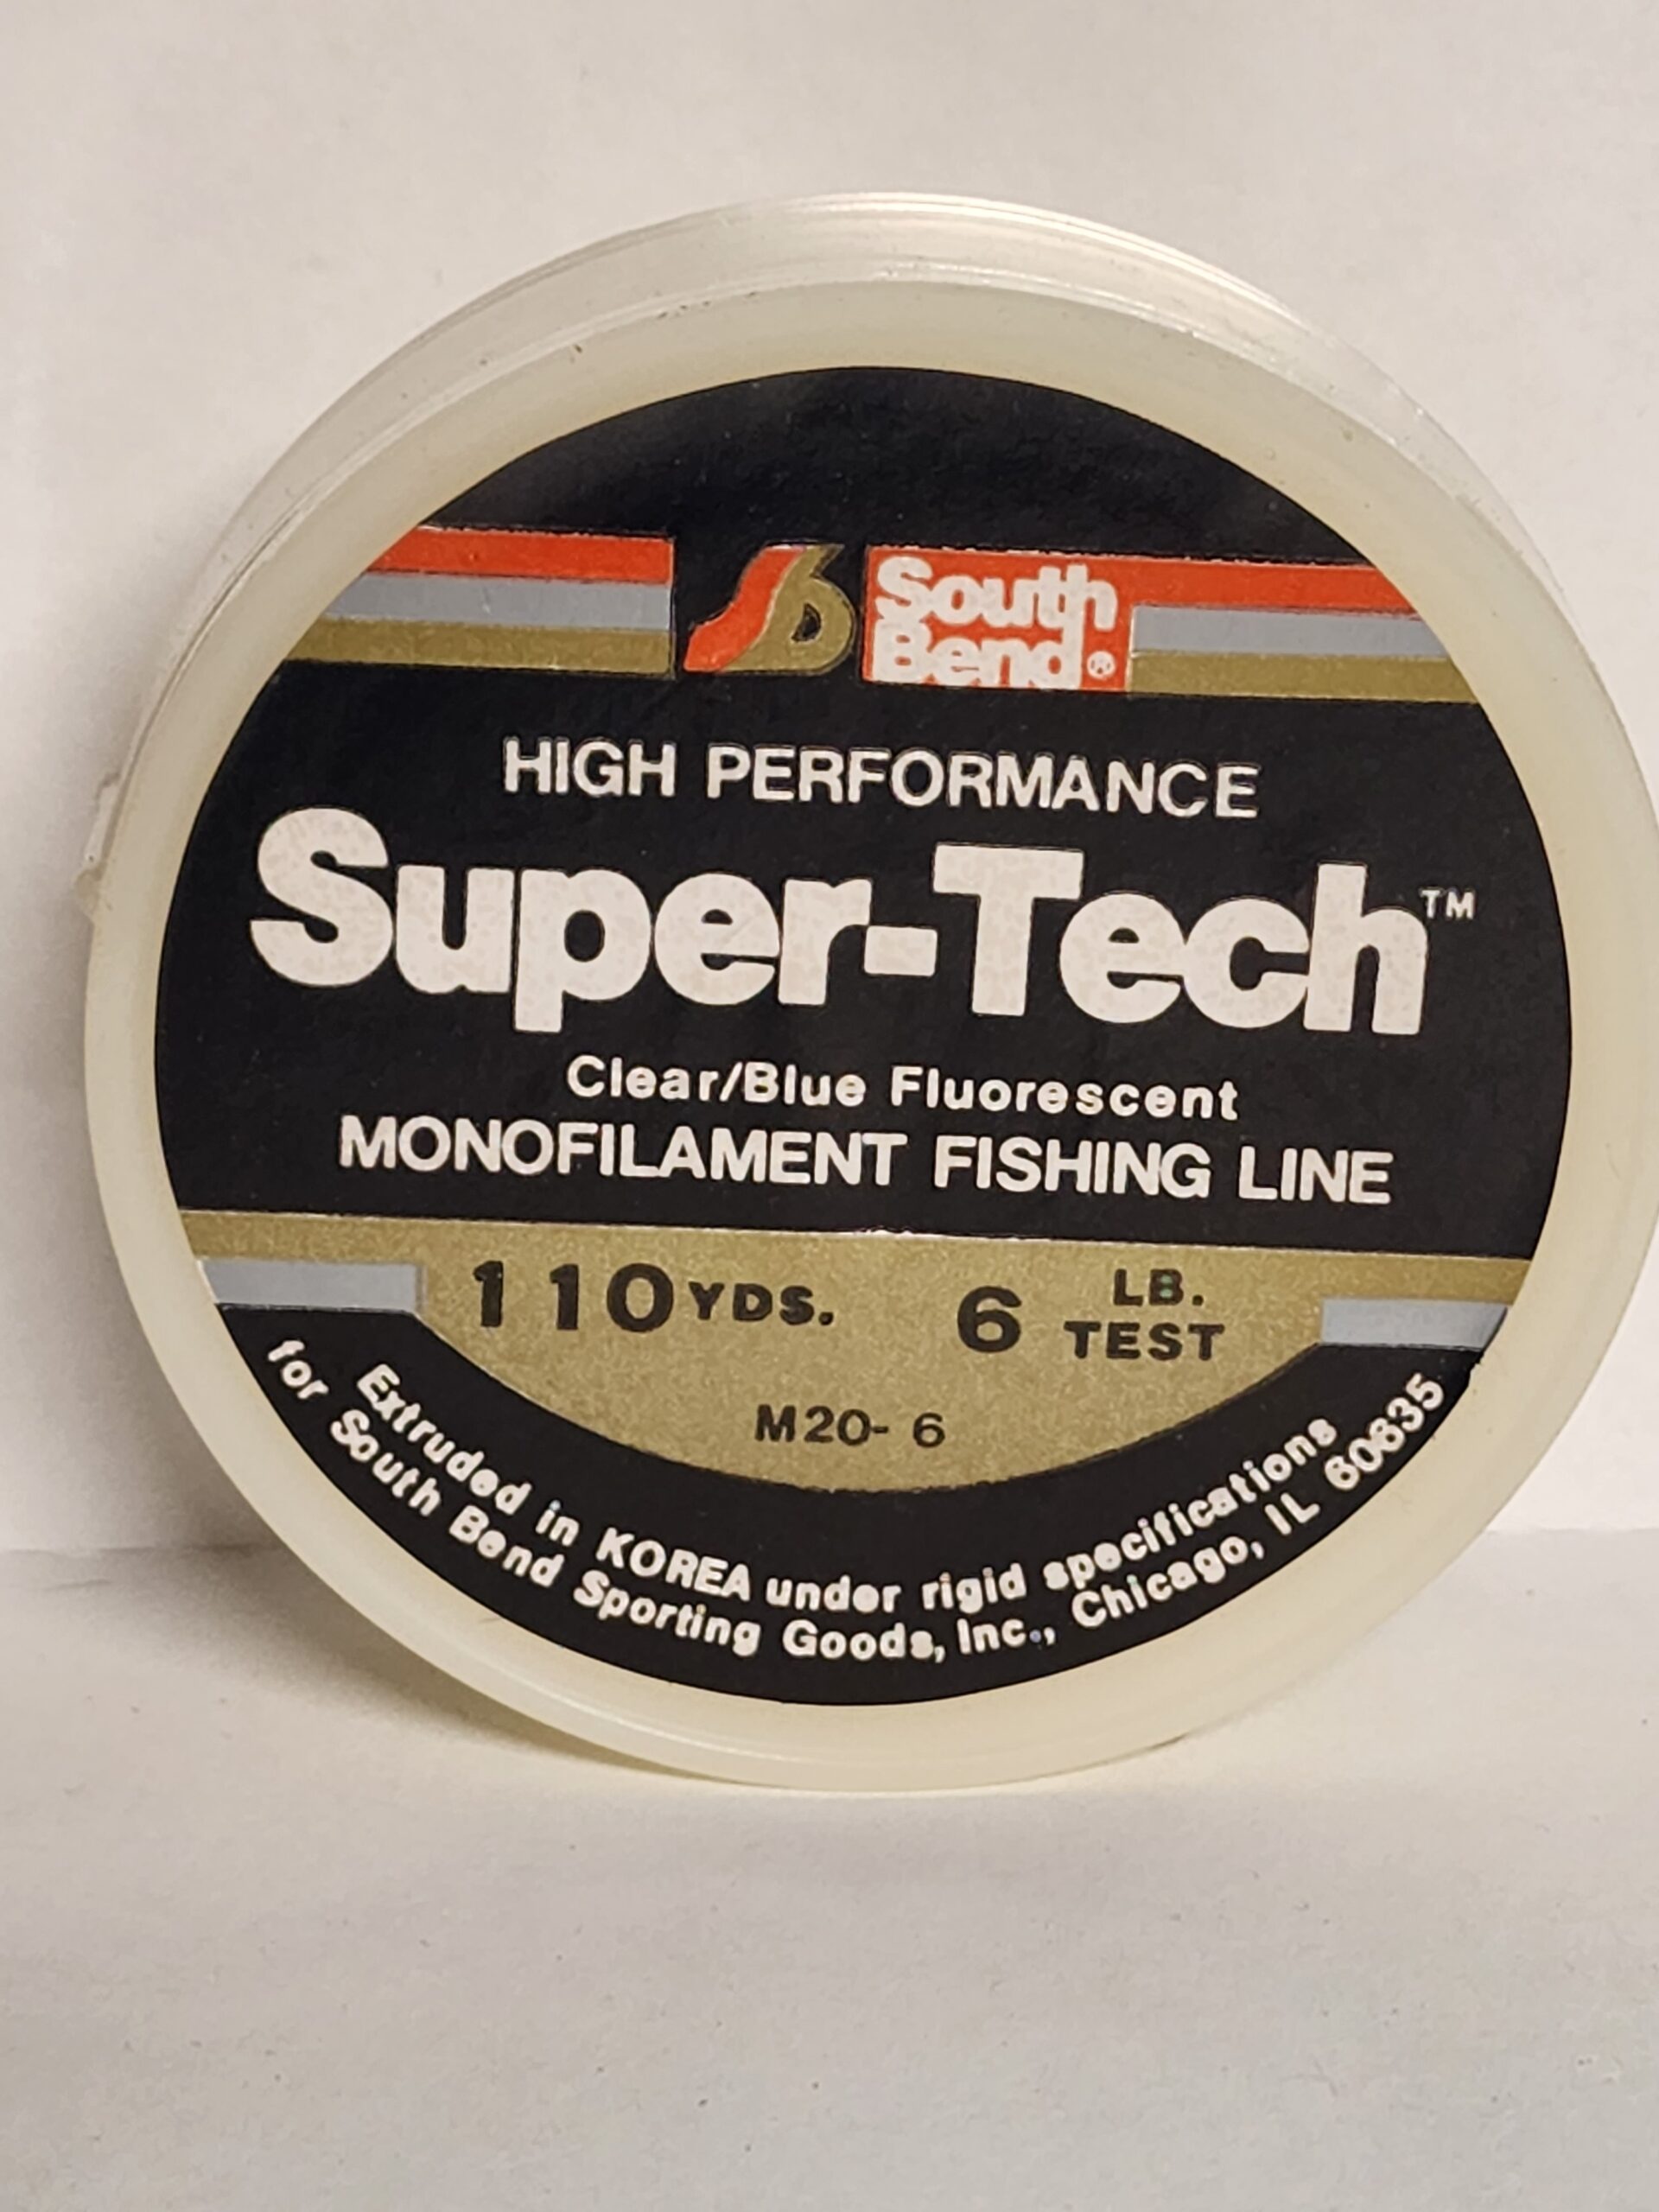 Super-Tech Clear/Blue Fluorescent Monofilament Fishing Line 6 lb